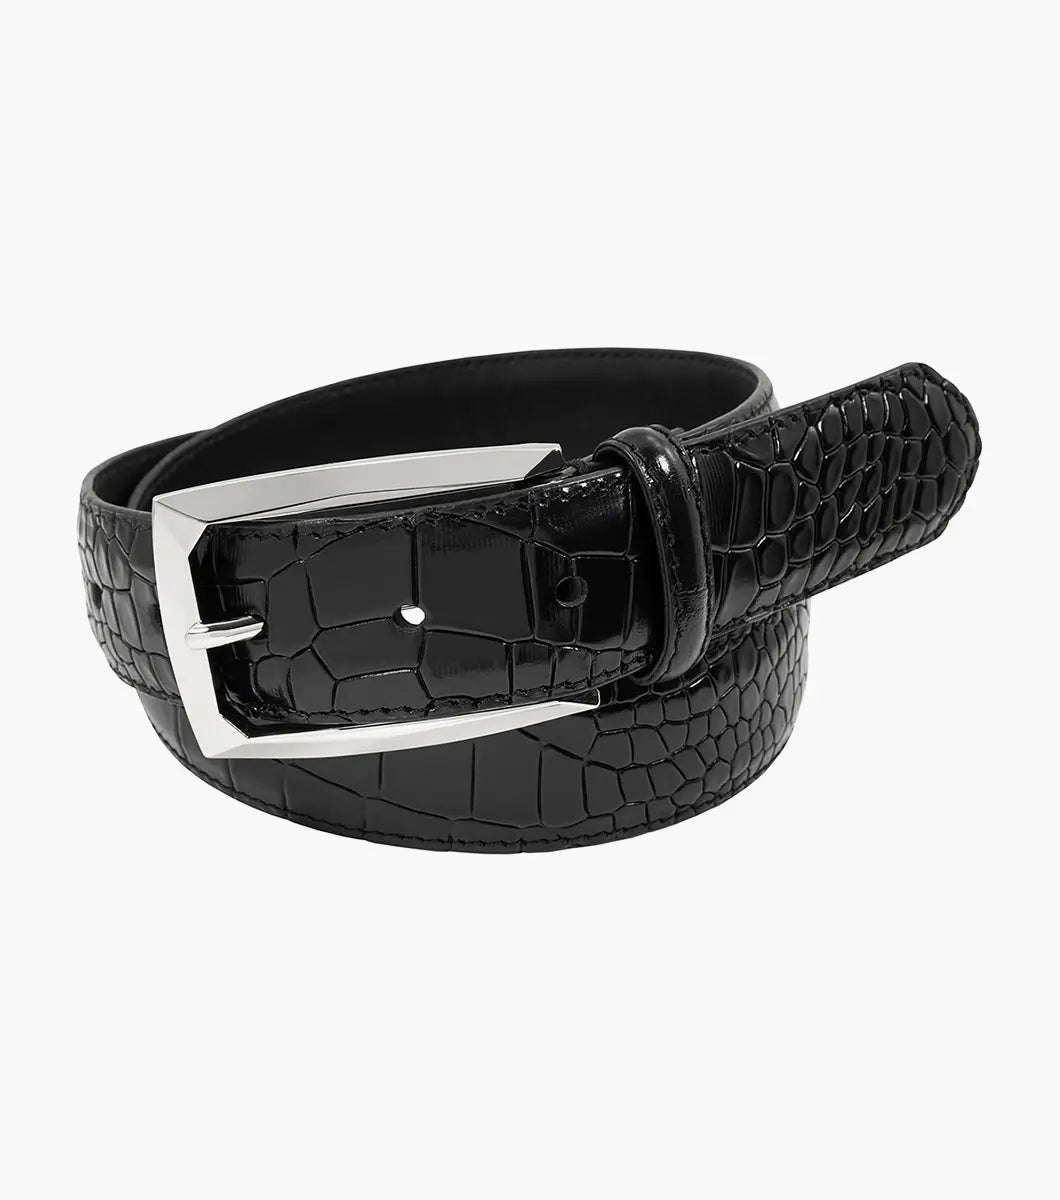 Black OZZIE Genuine Leather Croc Emboss Belt Available Sizes 32-44